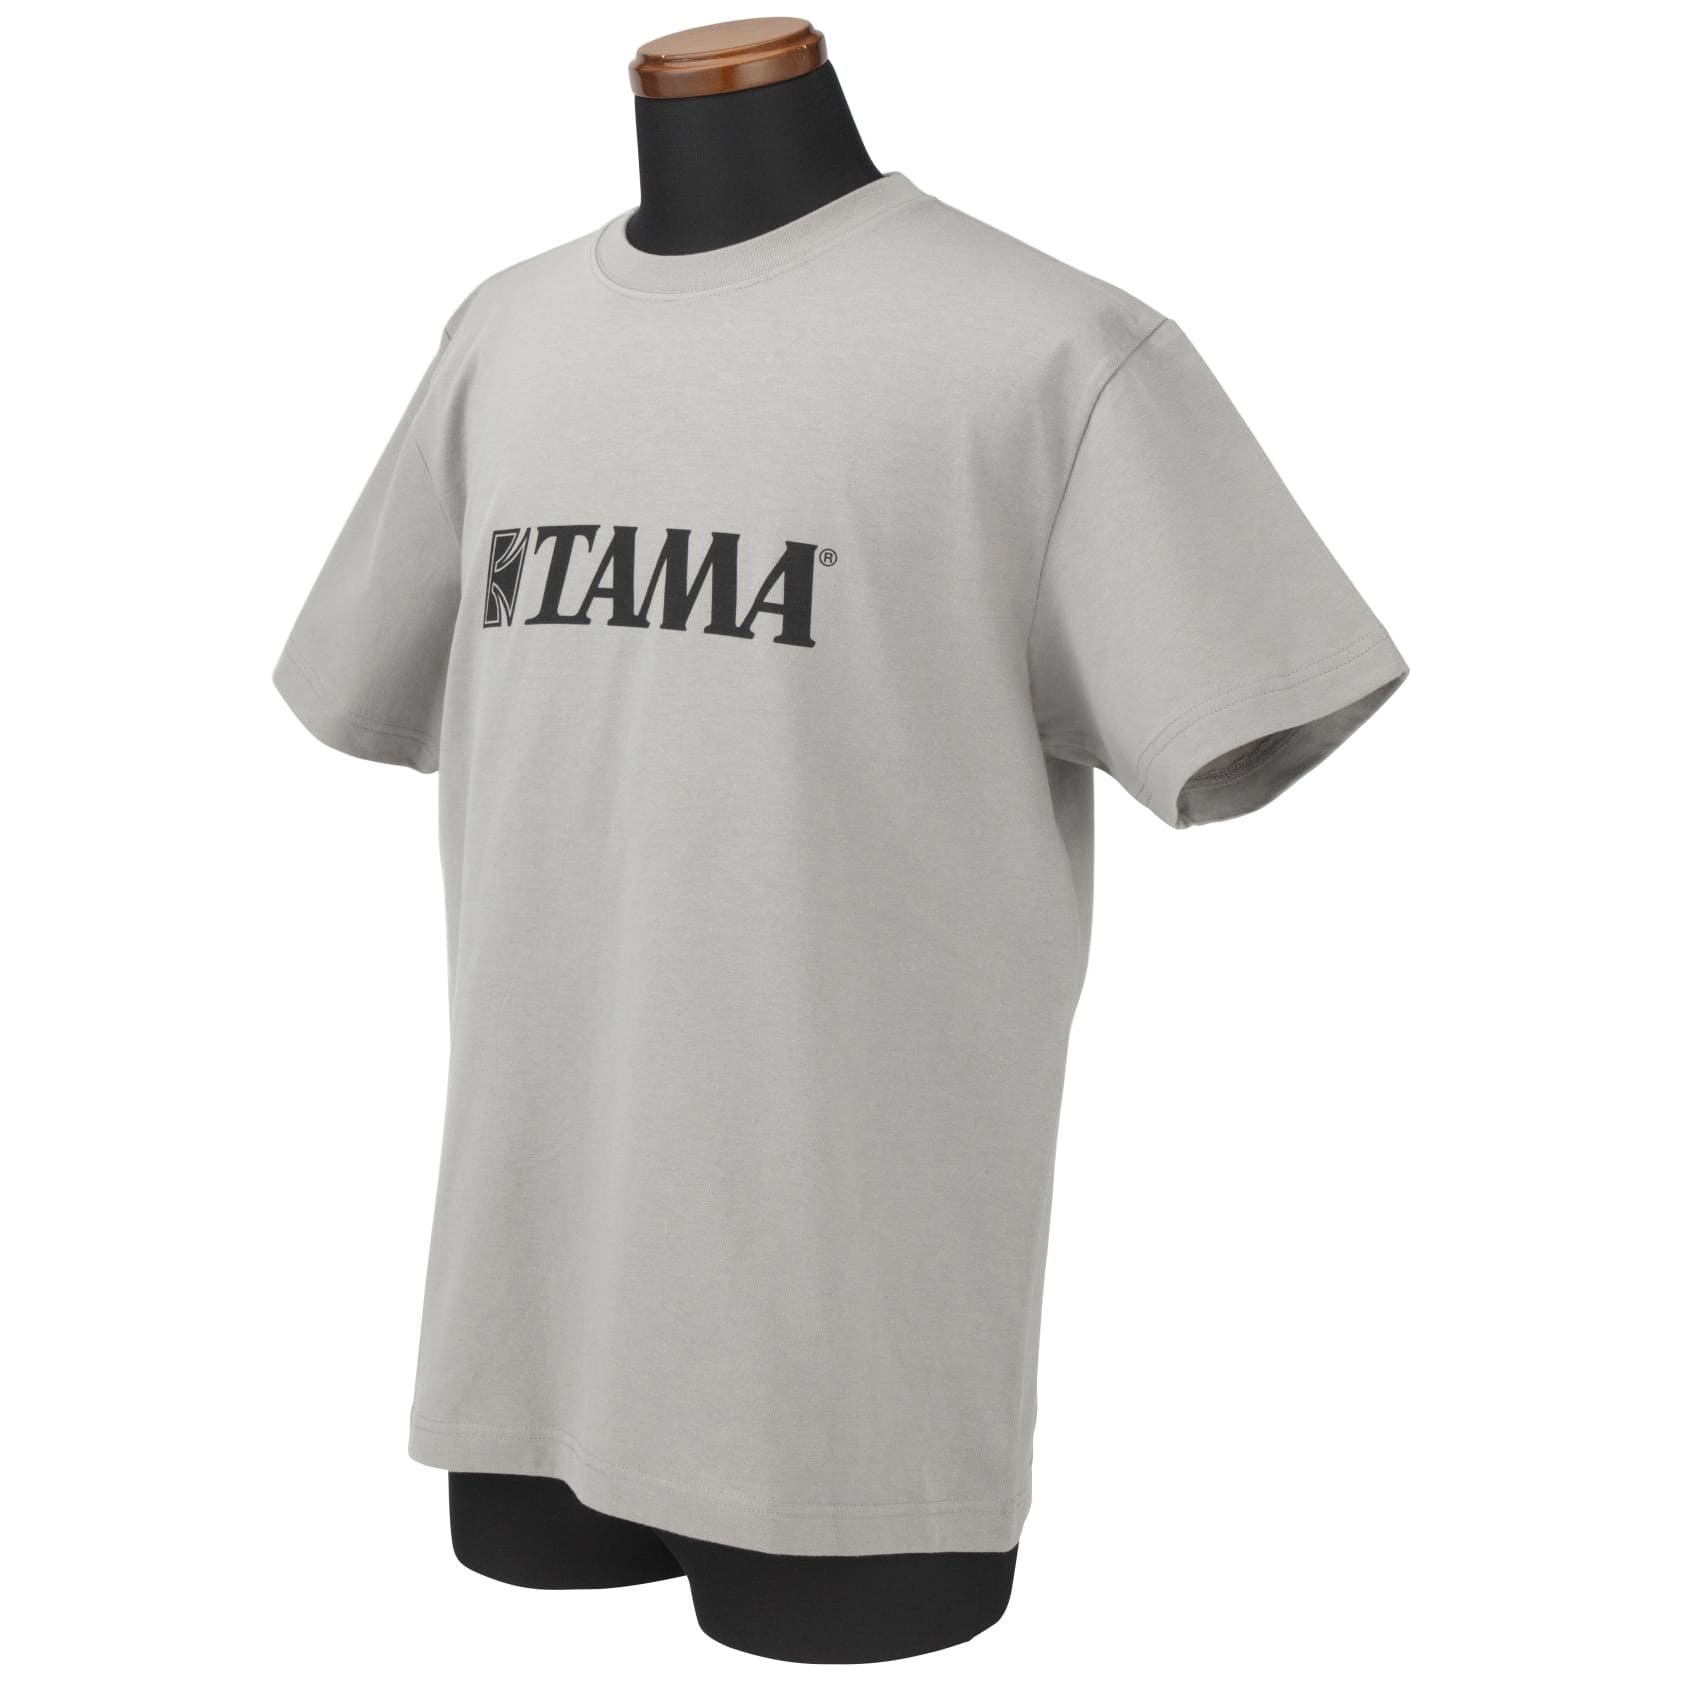 Tama TAMT005L T-Shirt Black Logo - grau - L